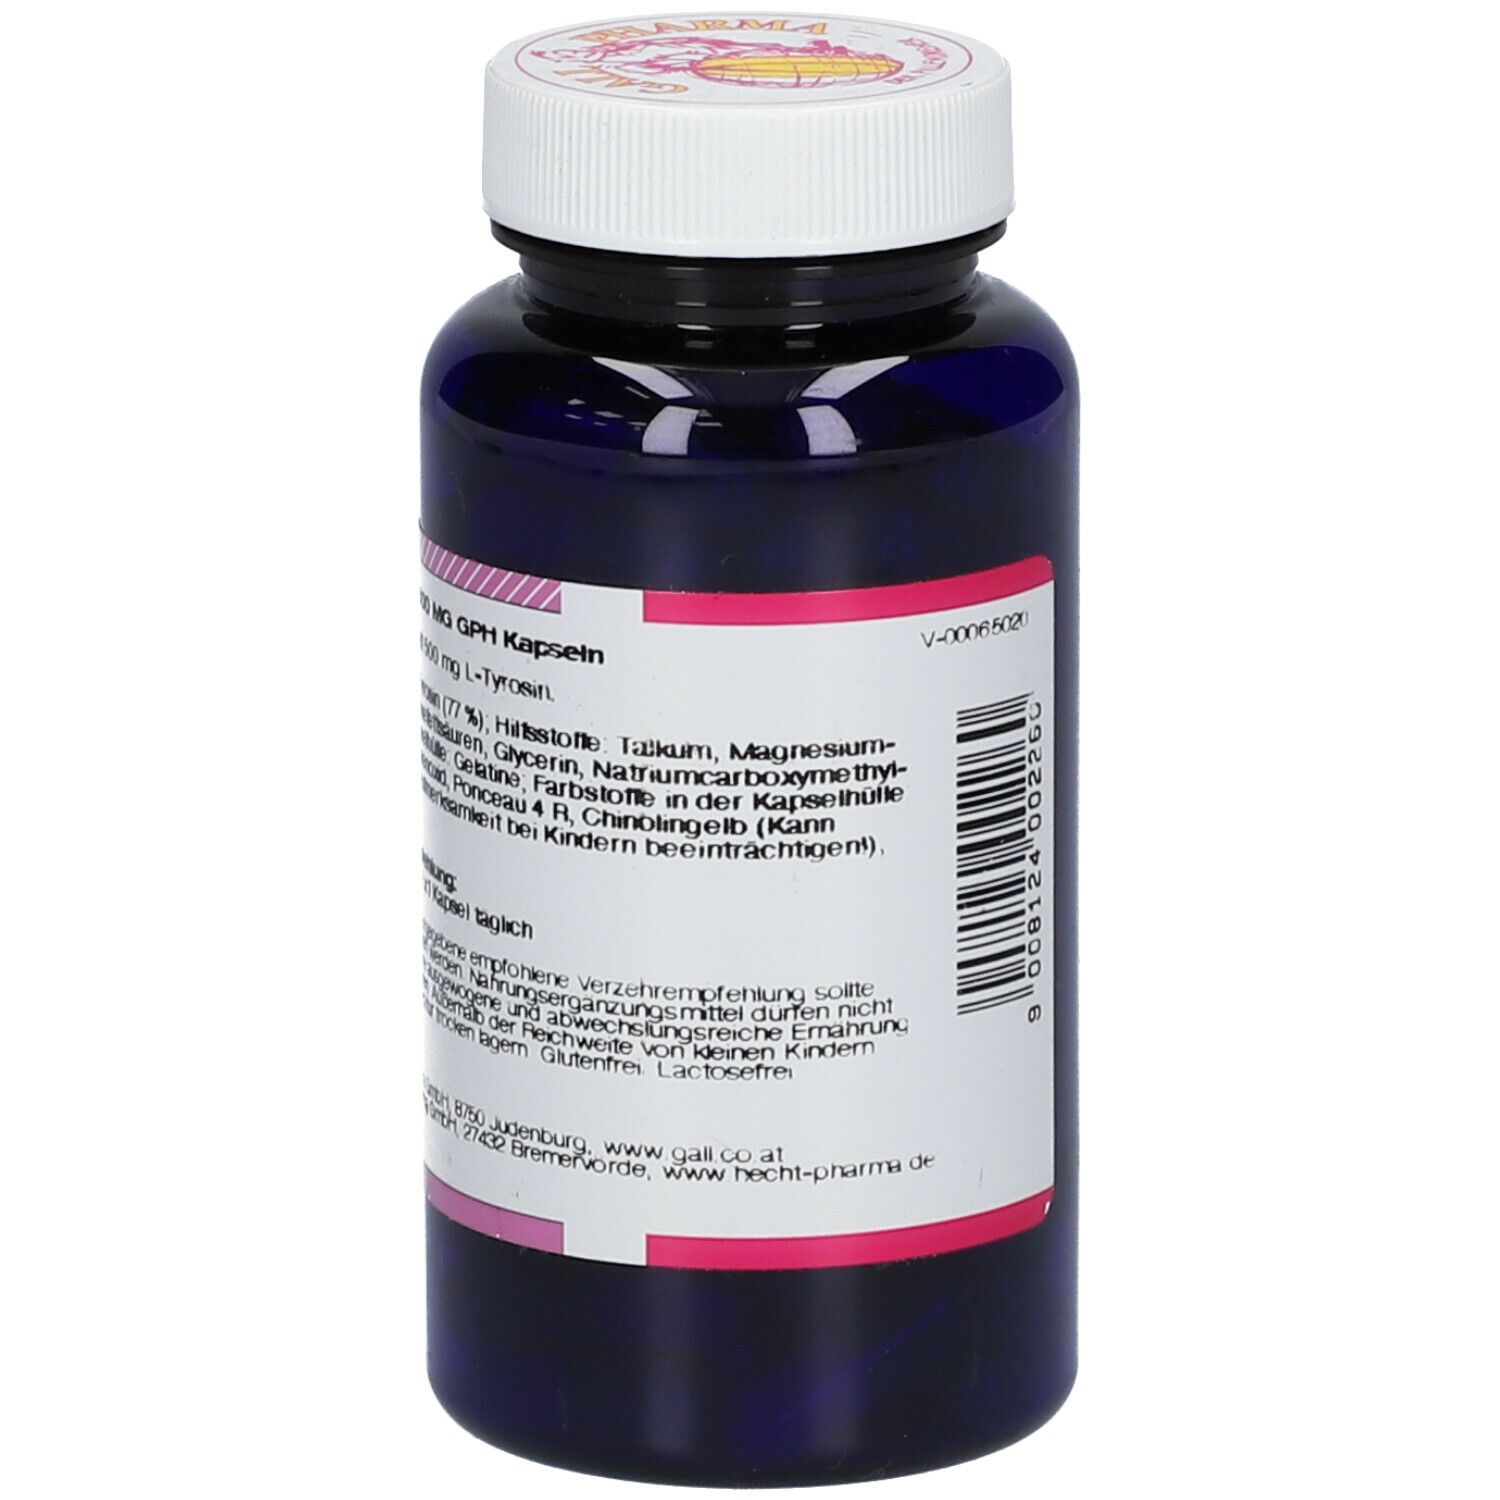 GALL PHARMA L-Tyrosin 500 mg GPH